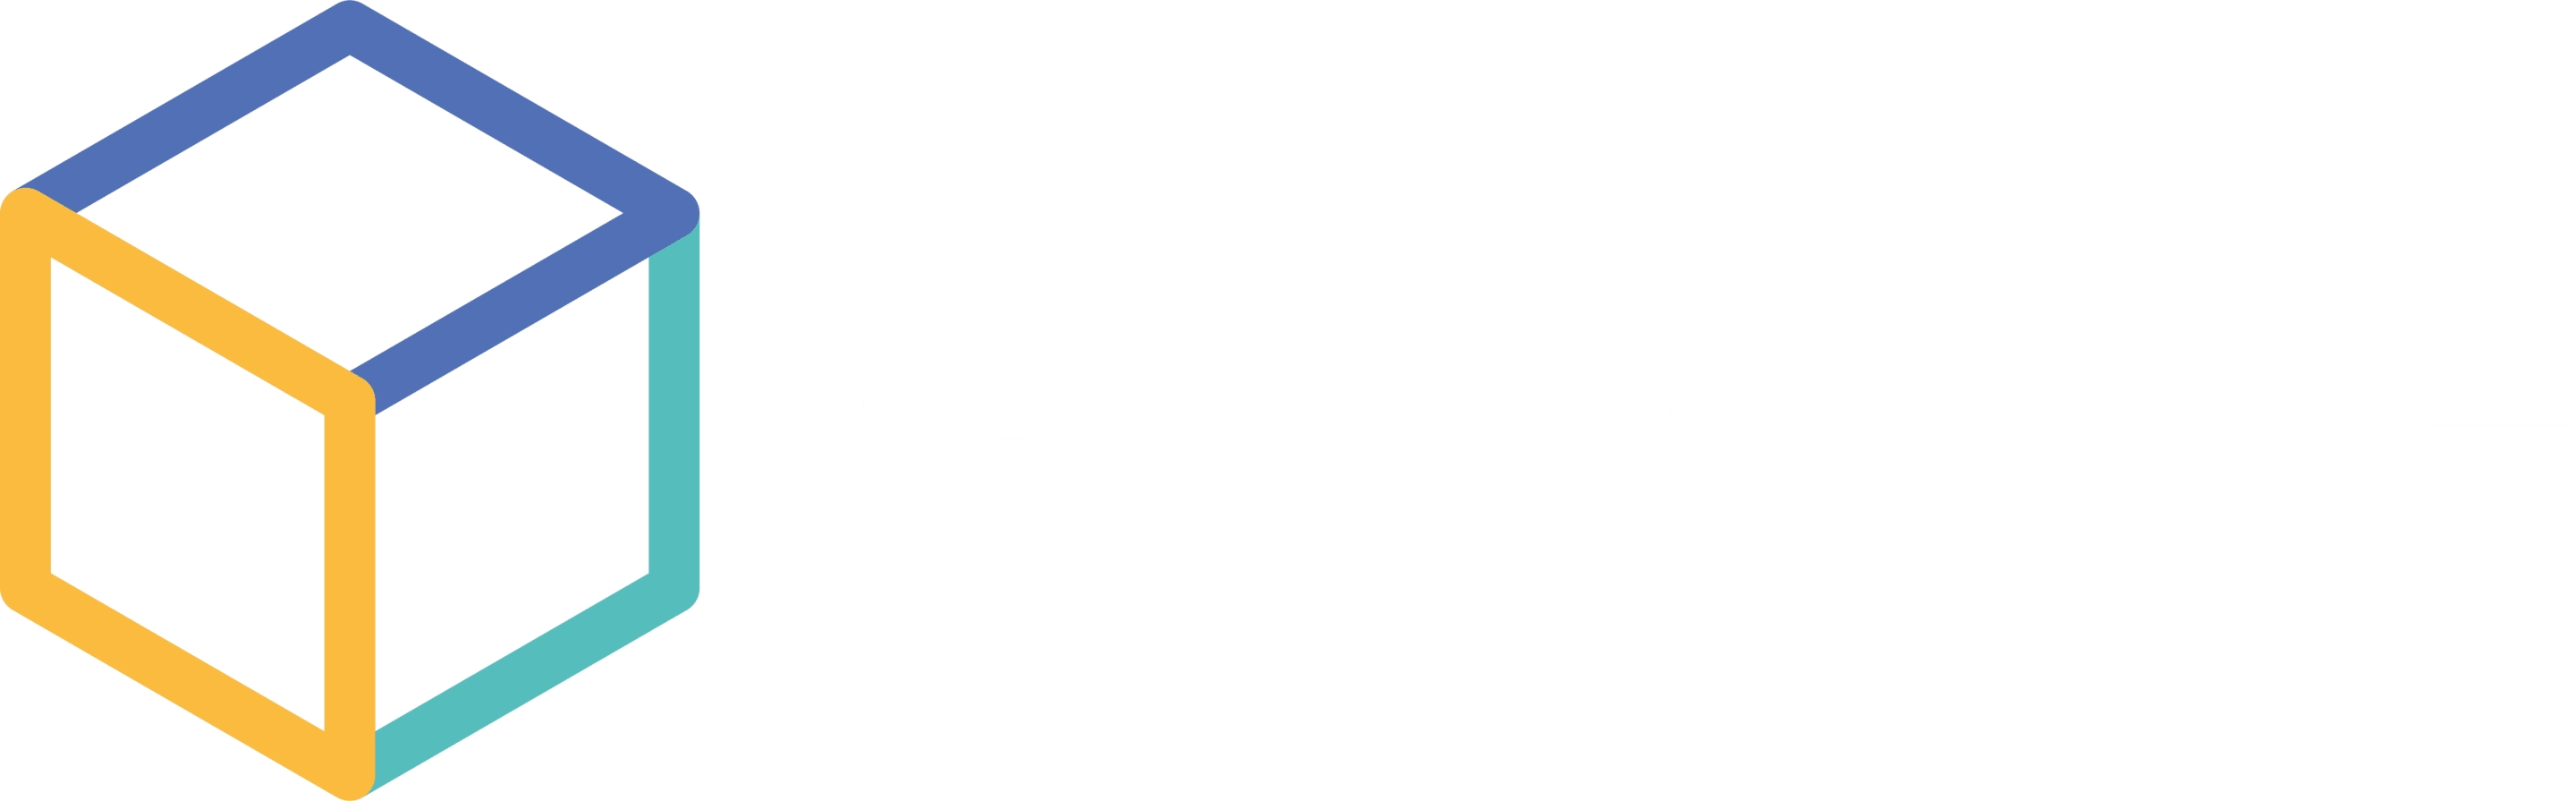 casebase logo white